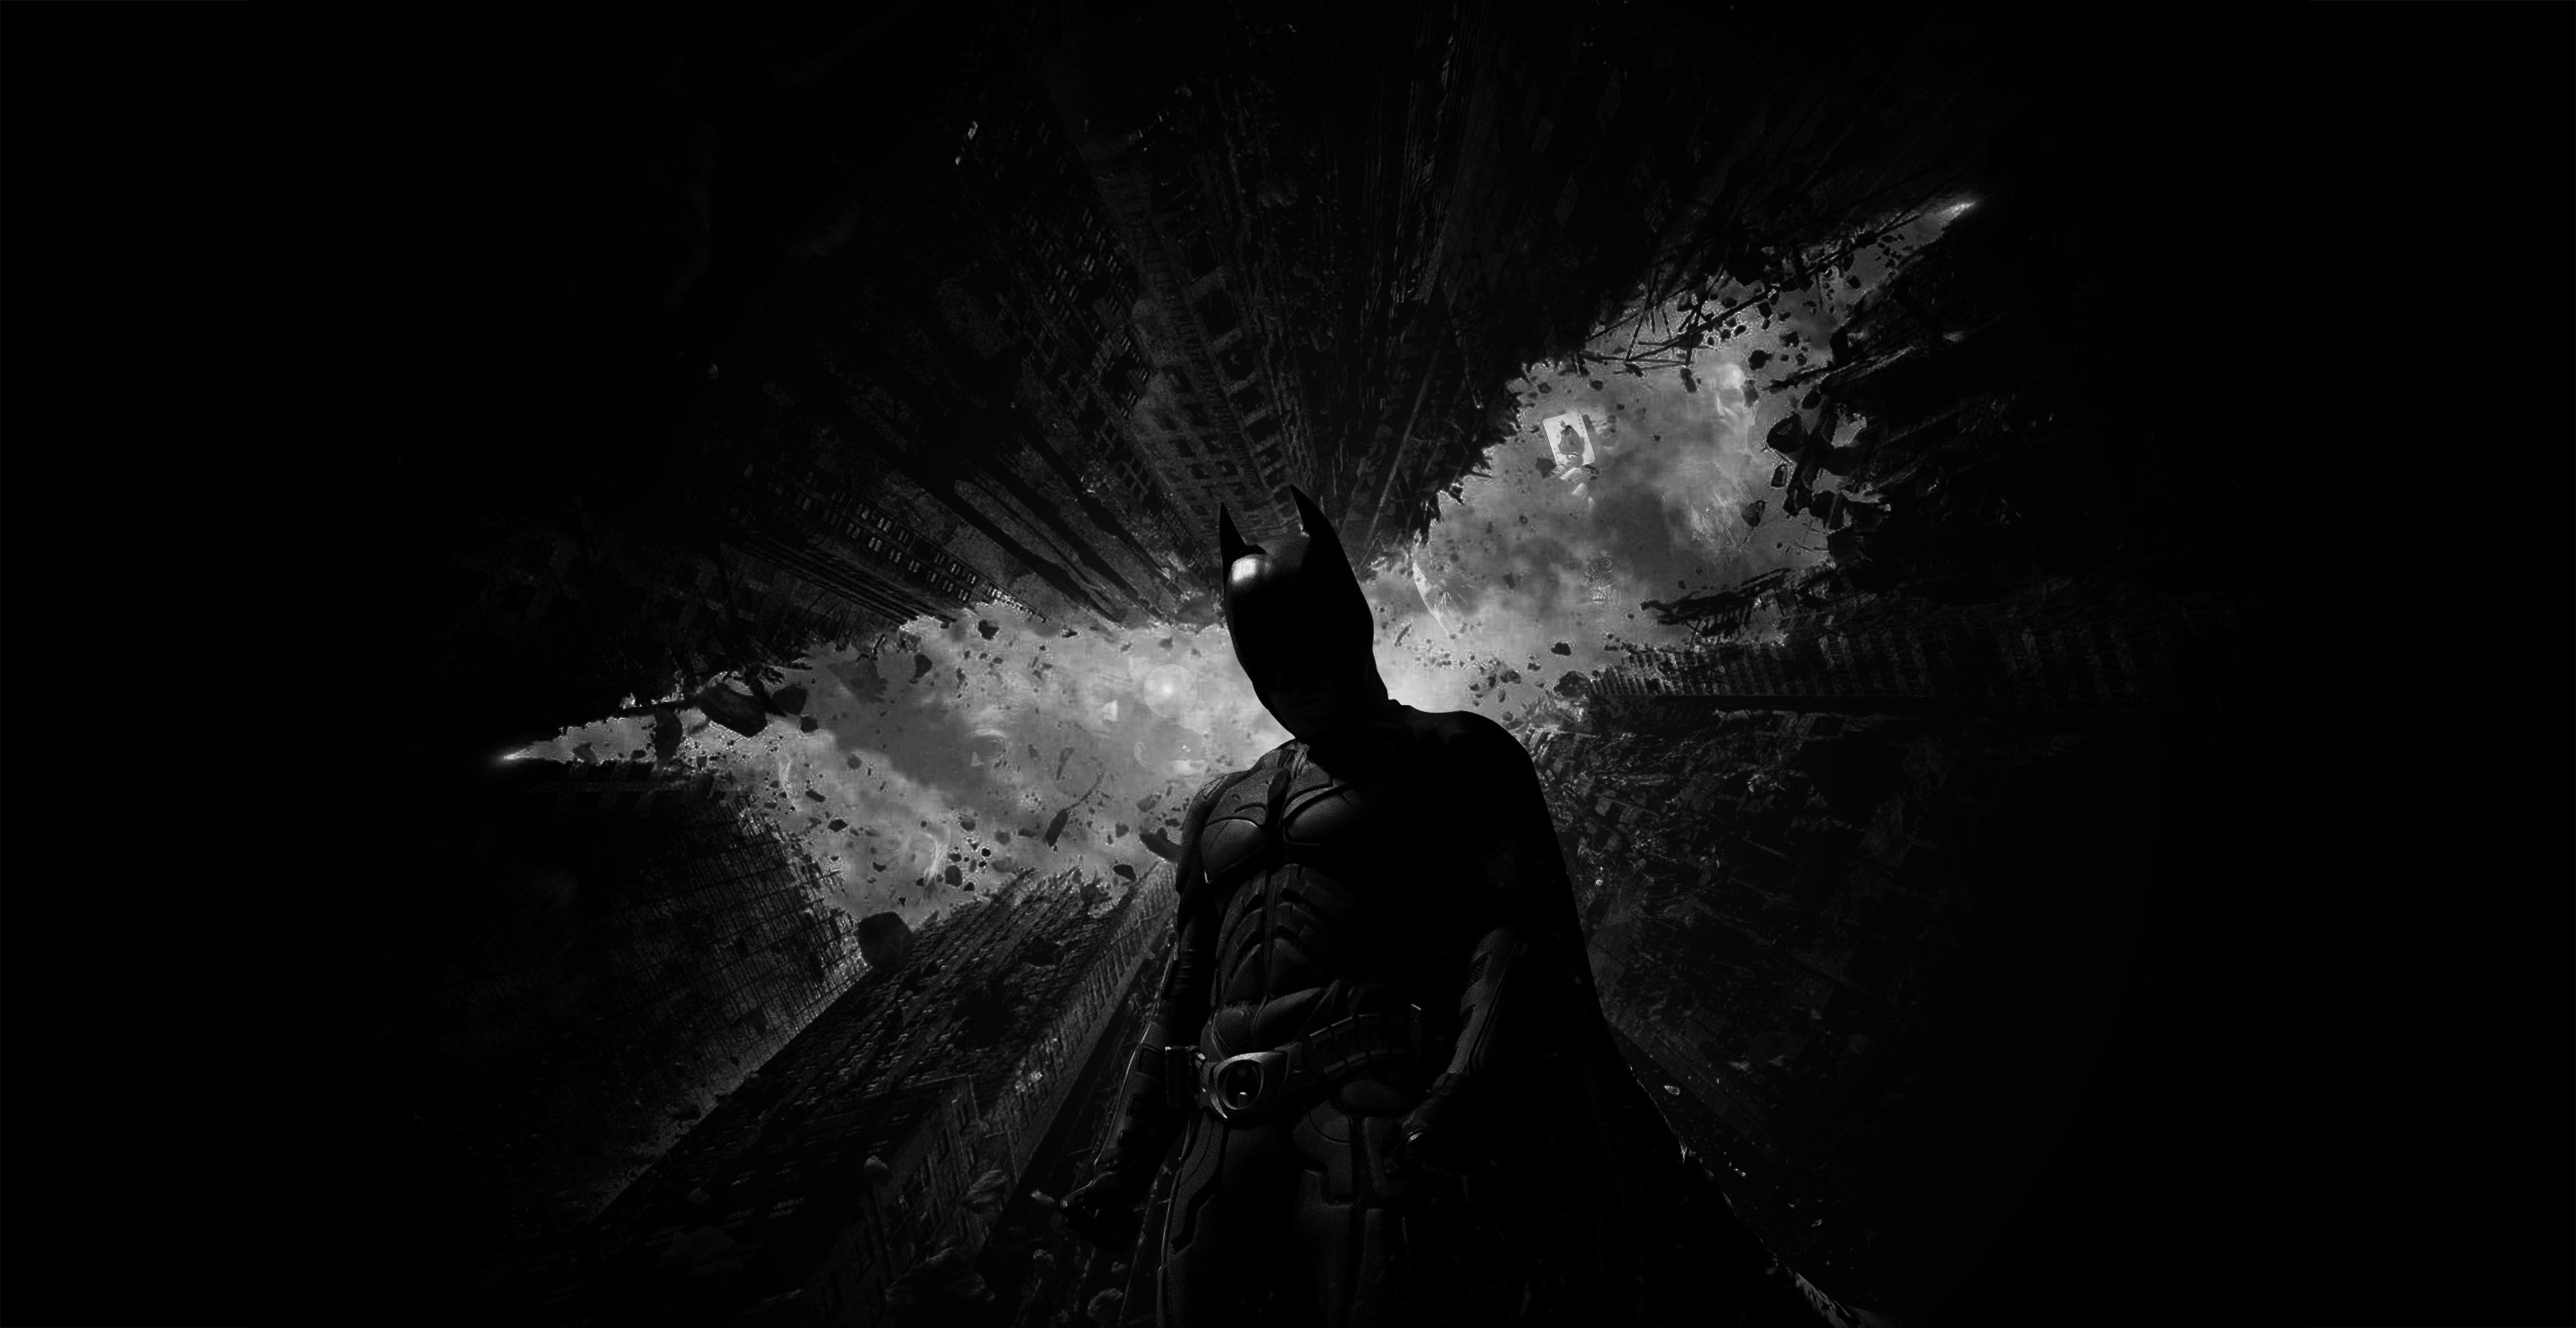 Batman 4K Dark Night Wallpapers